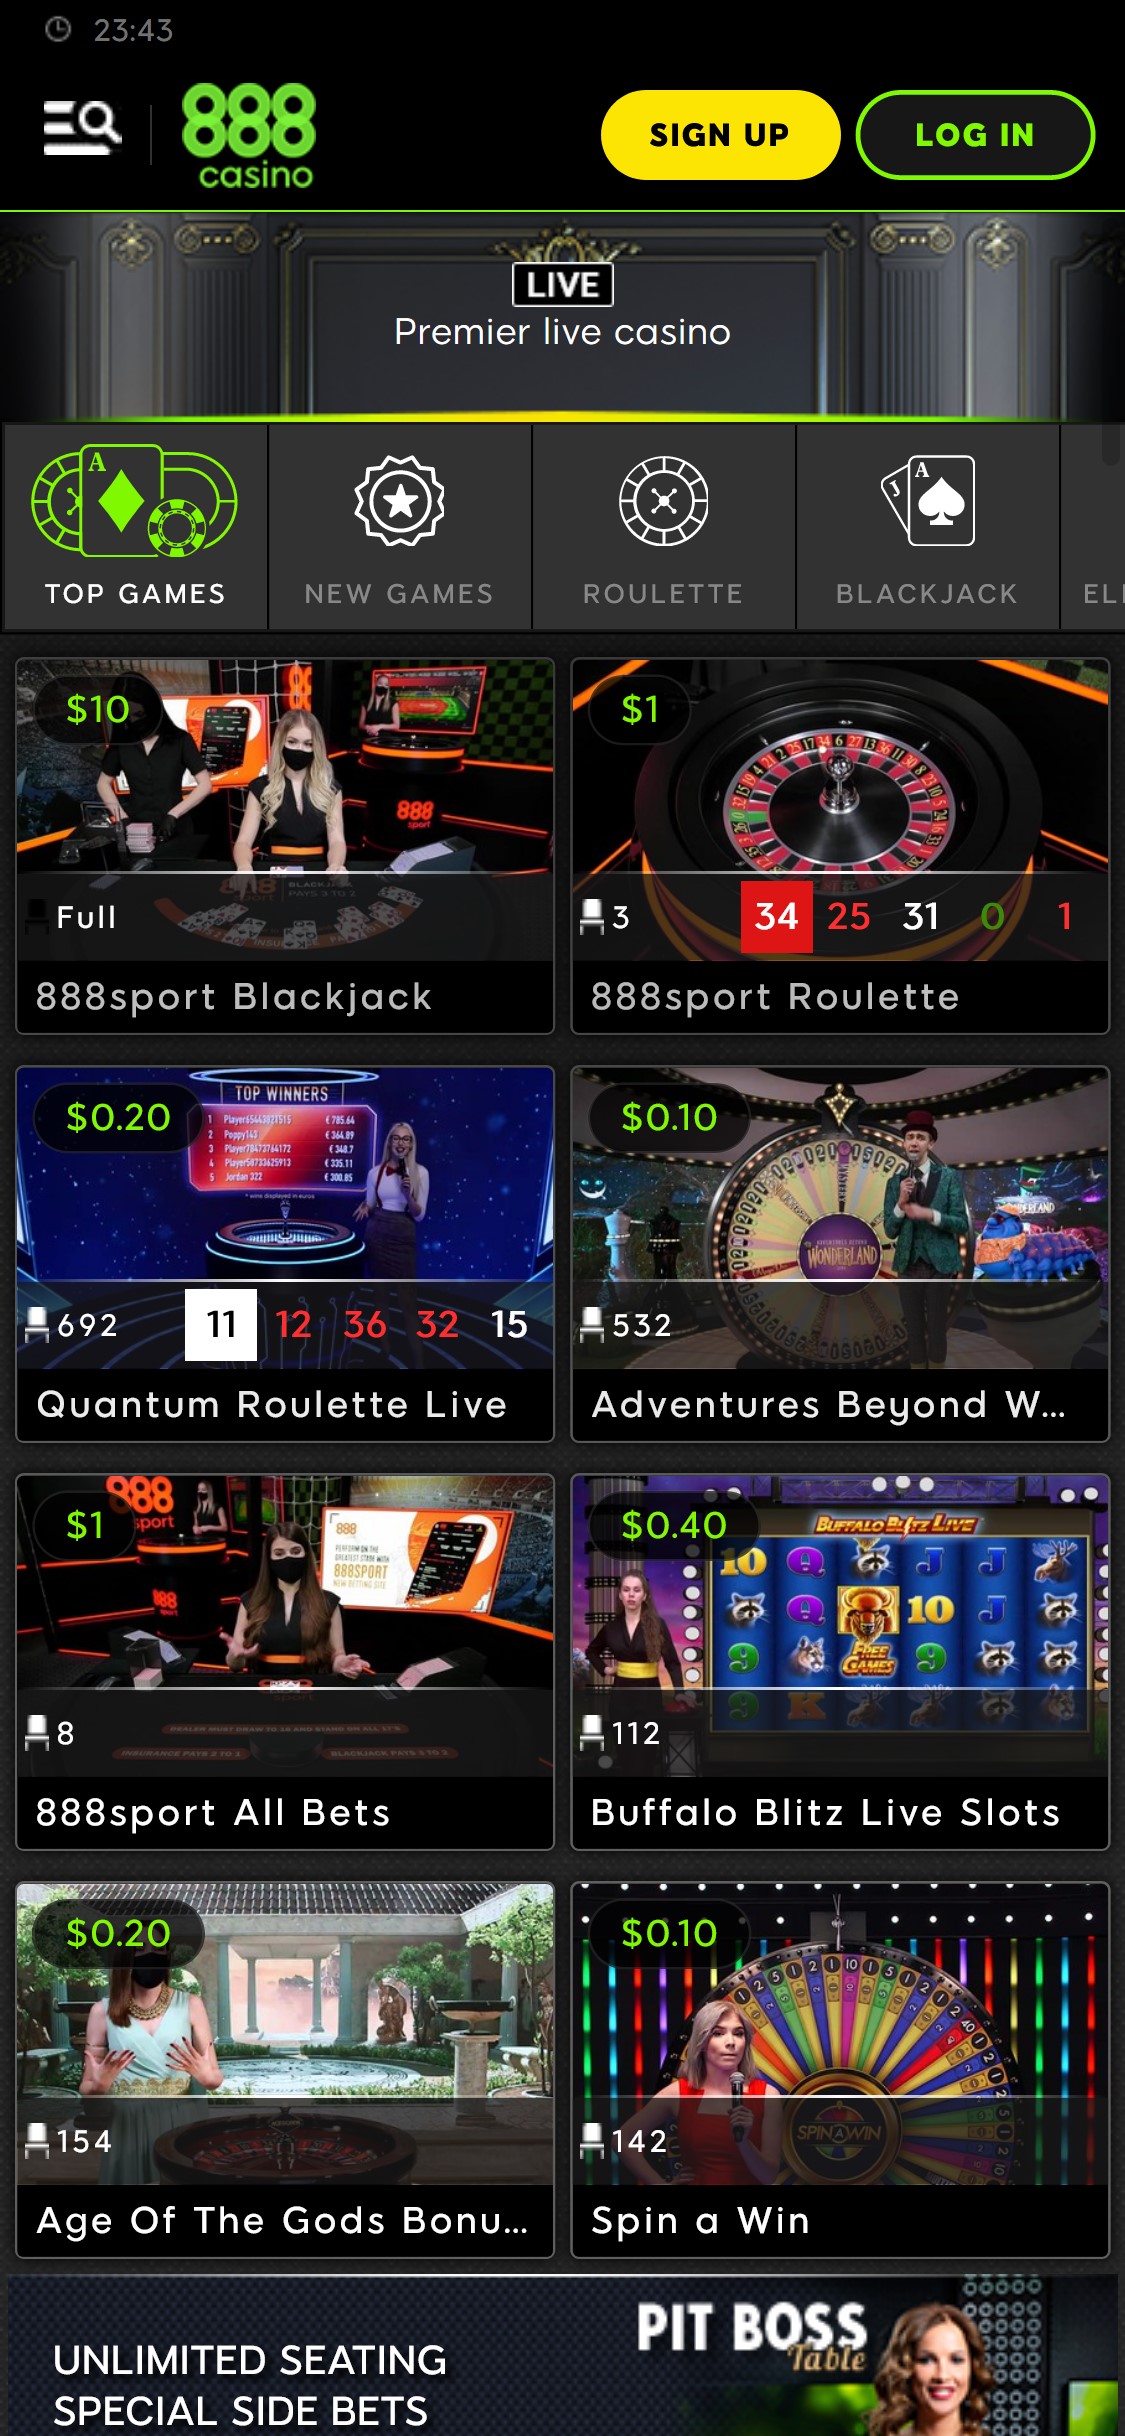 888Casino Mobile Live Dealer Games Review